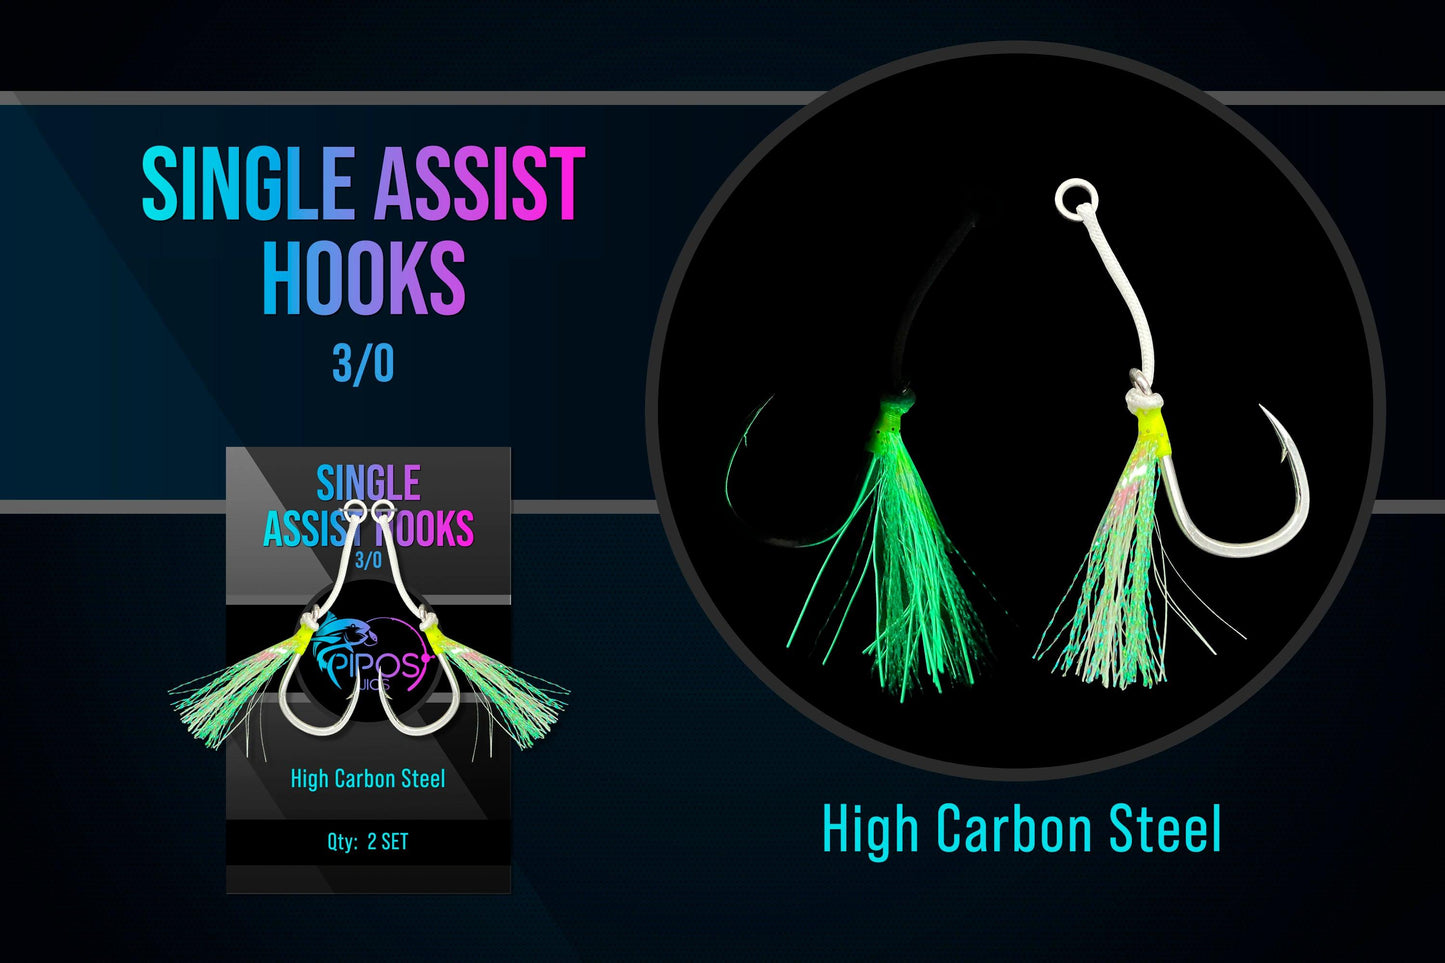 Single Assist Hook - Pipos Jigs